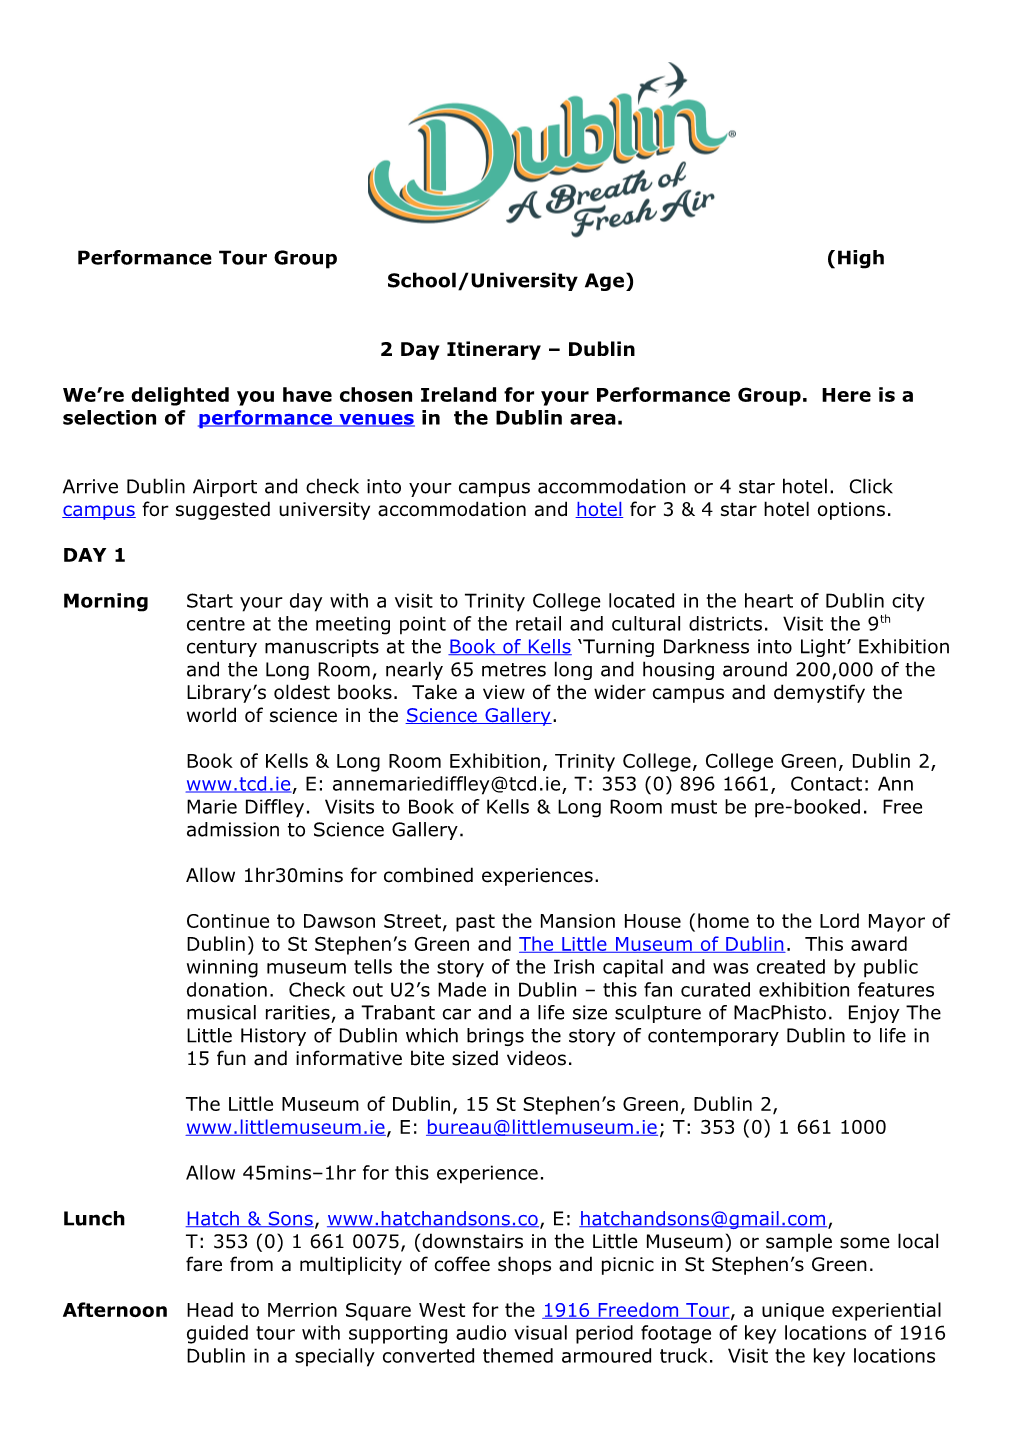 Performance Tour Group (High School/University Age)